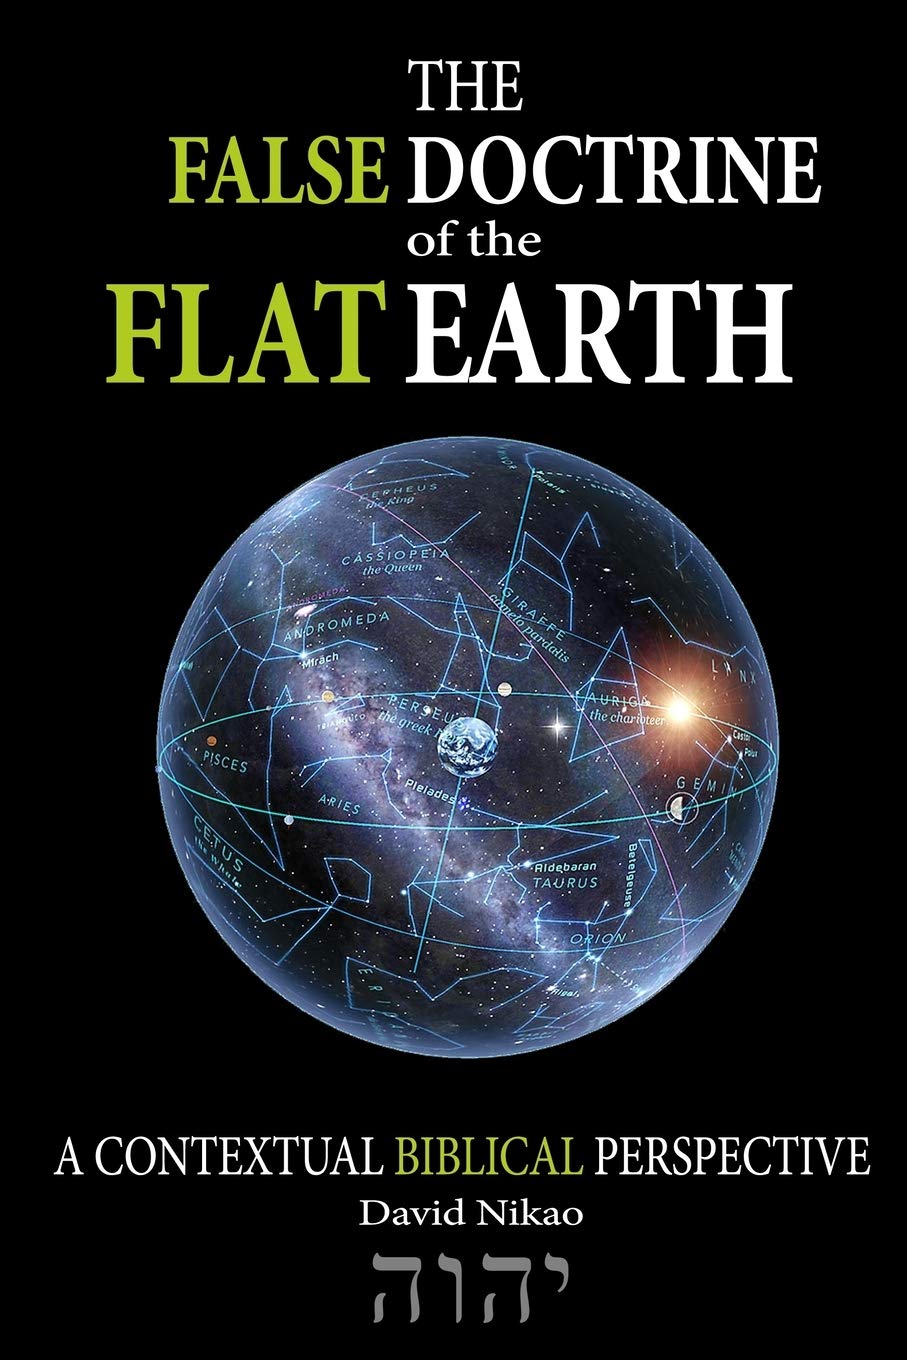 earth is flat bible error